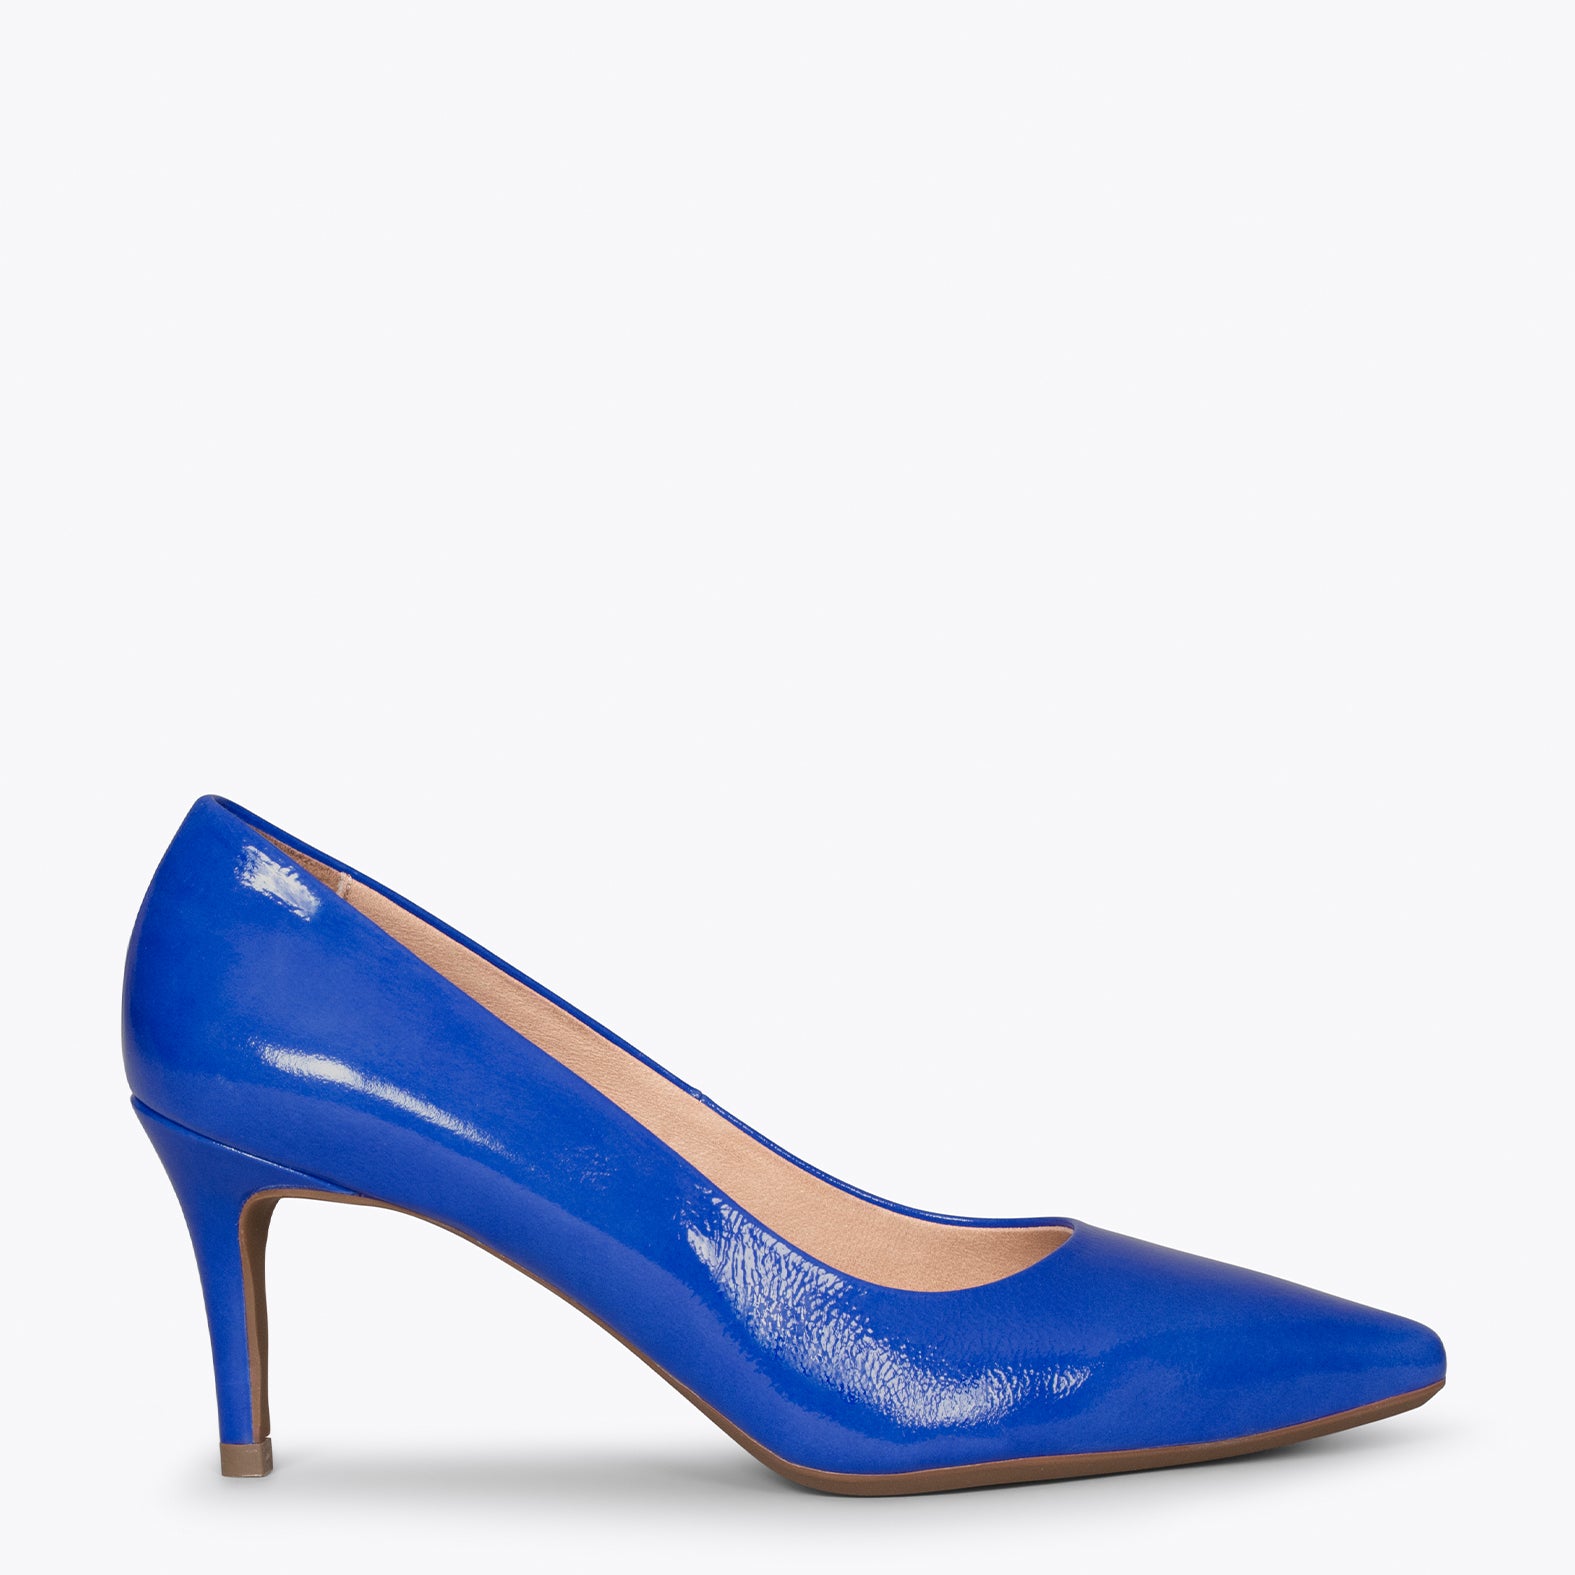 STILETTO PATENT – ELECTRIC BLUE patent leather stiletto heel